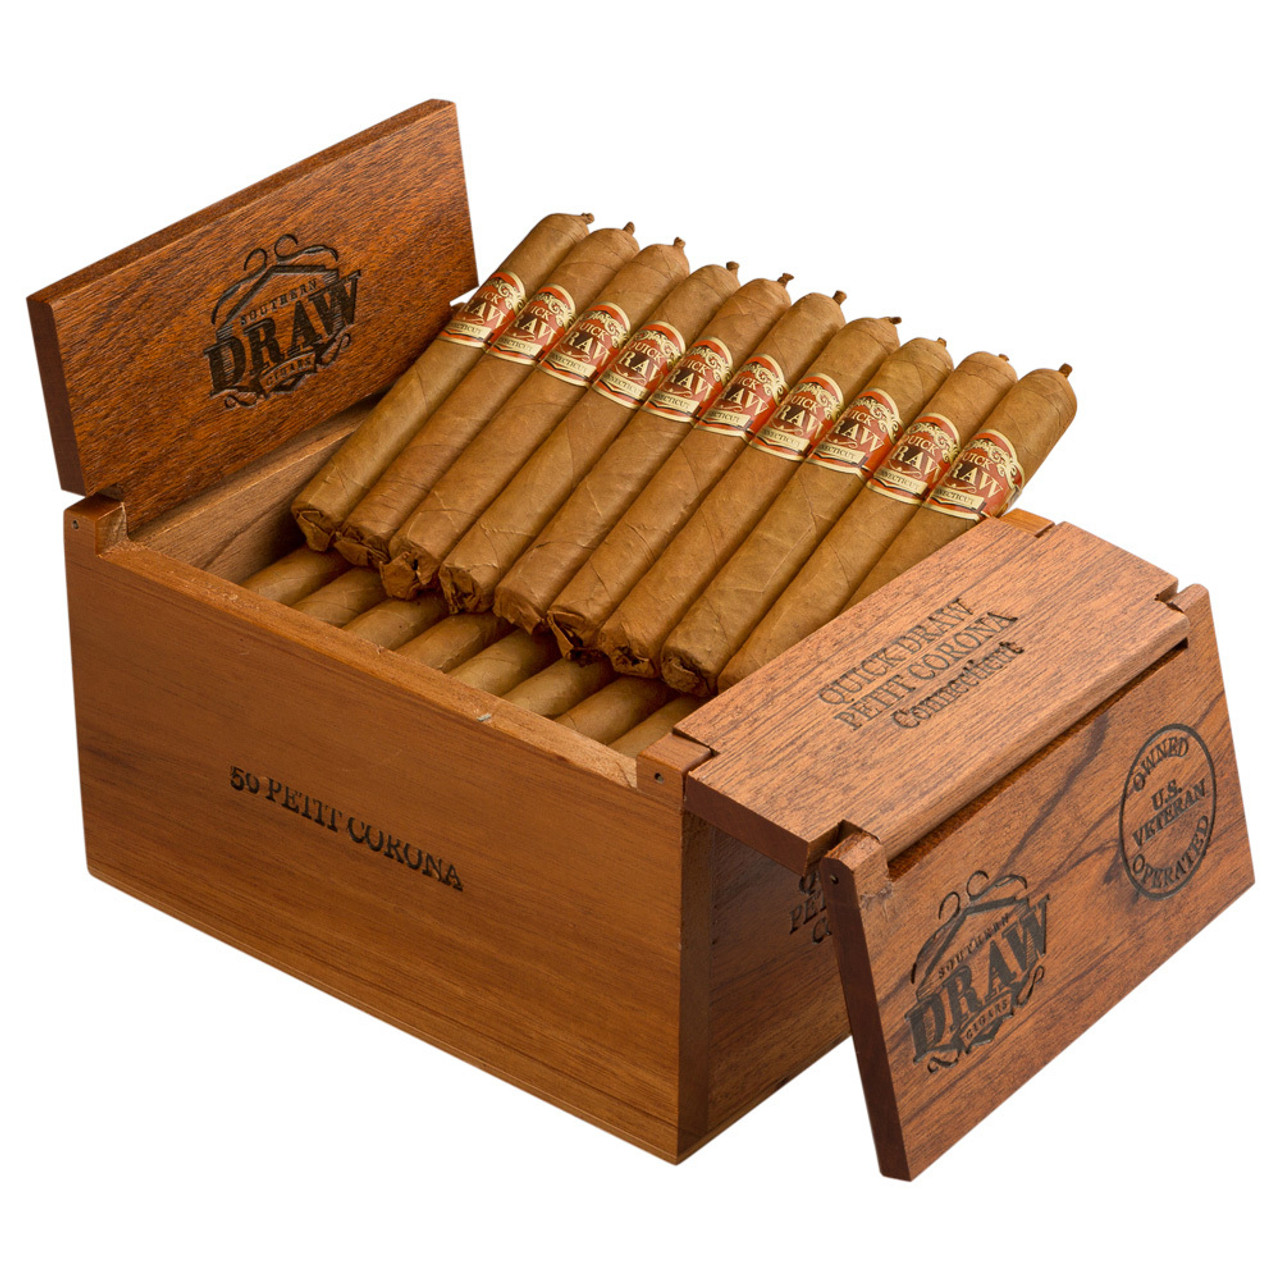 Southern Draw Quickdraw PA Broadleaf Corona Gorda Cigars - 4.5 x 44 (Box of 25) *Box